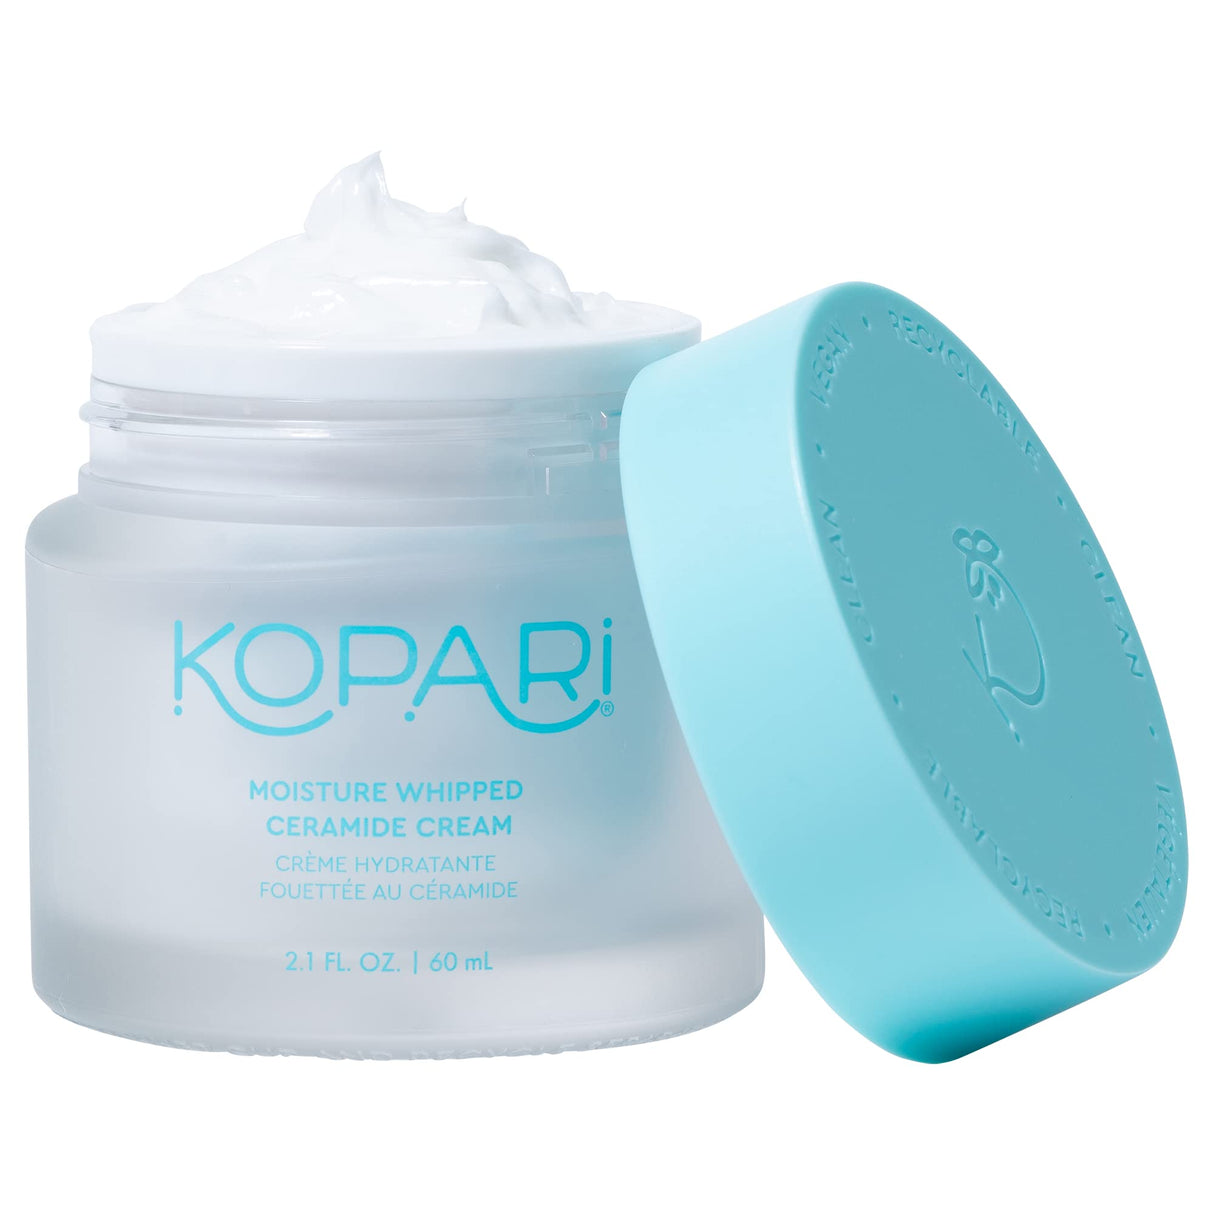 Kopari Beauty Moisture Whipped Ceramide Cream (2.1 oz.)